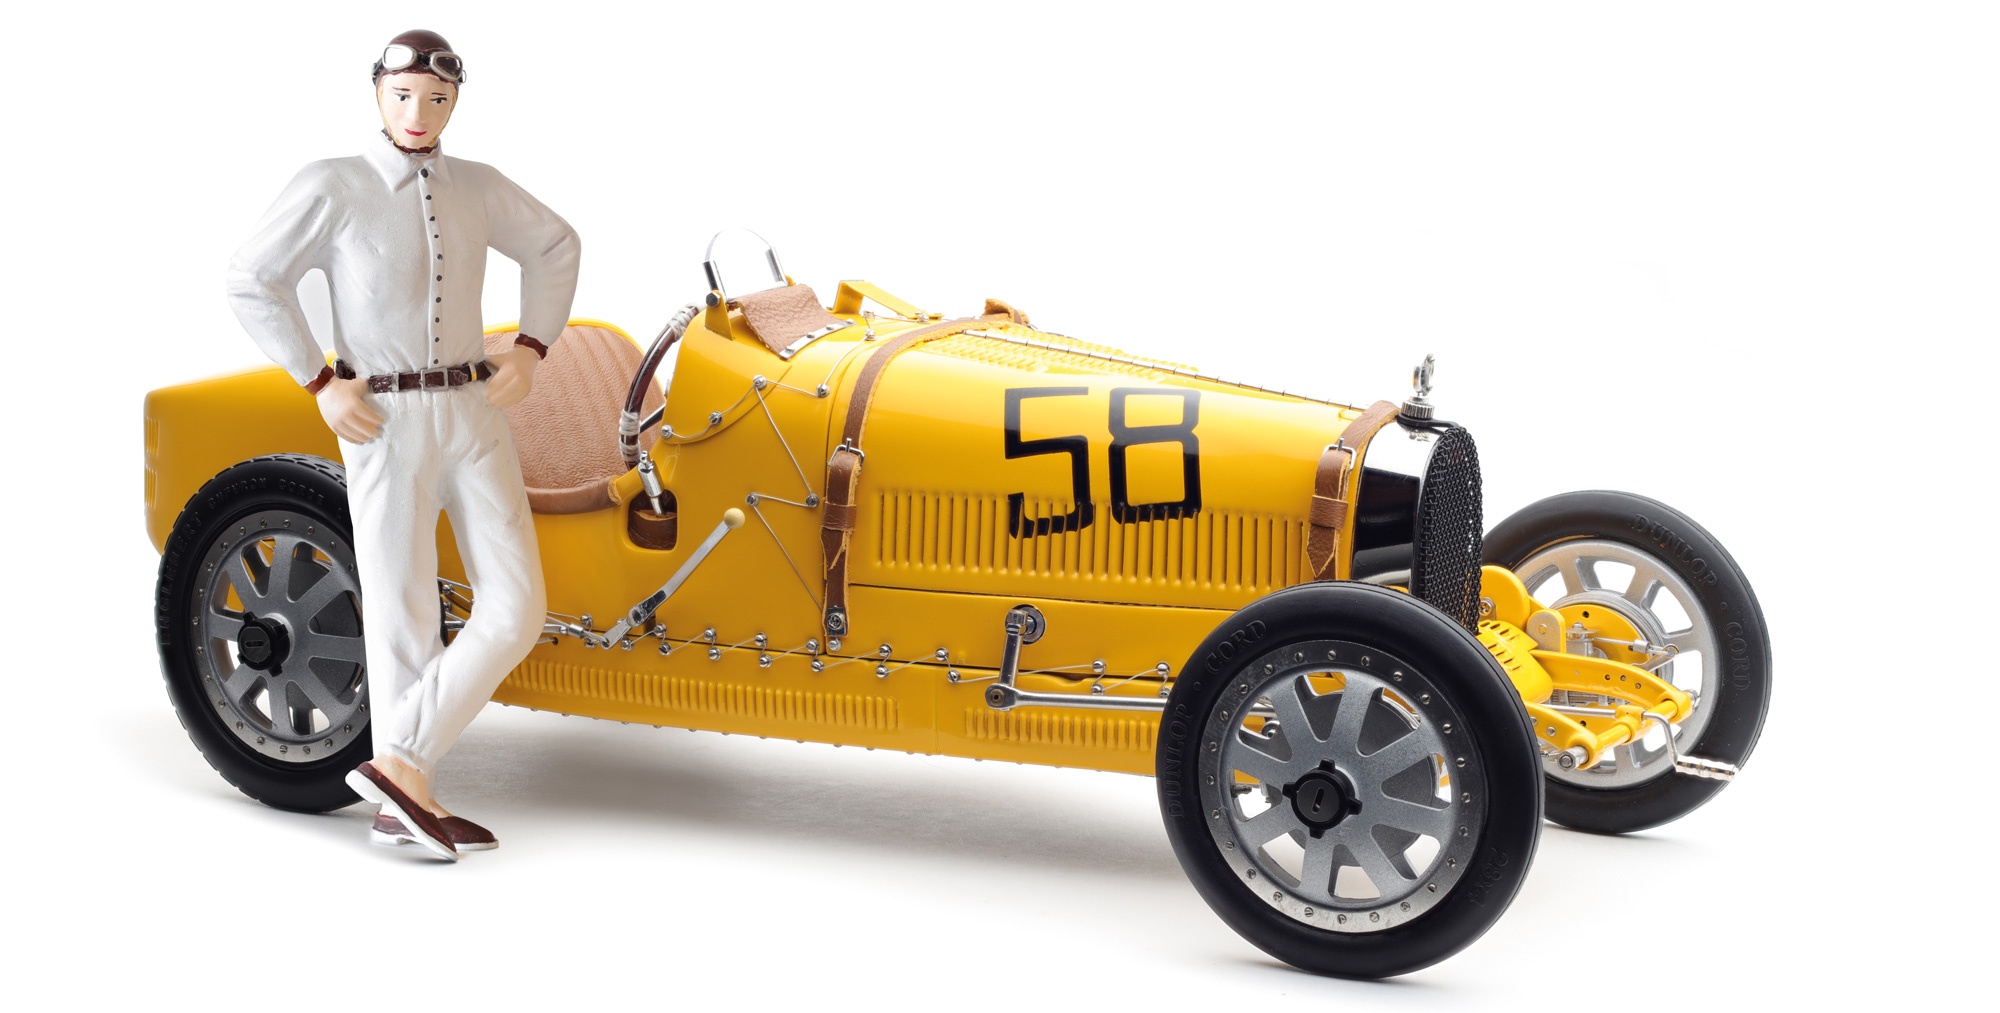 Cmc Bugatti Type 35 Grand Prix Yellow Livery With A Female Racer Figurine Cmc Modelcars